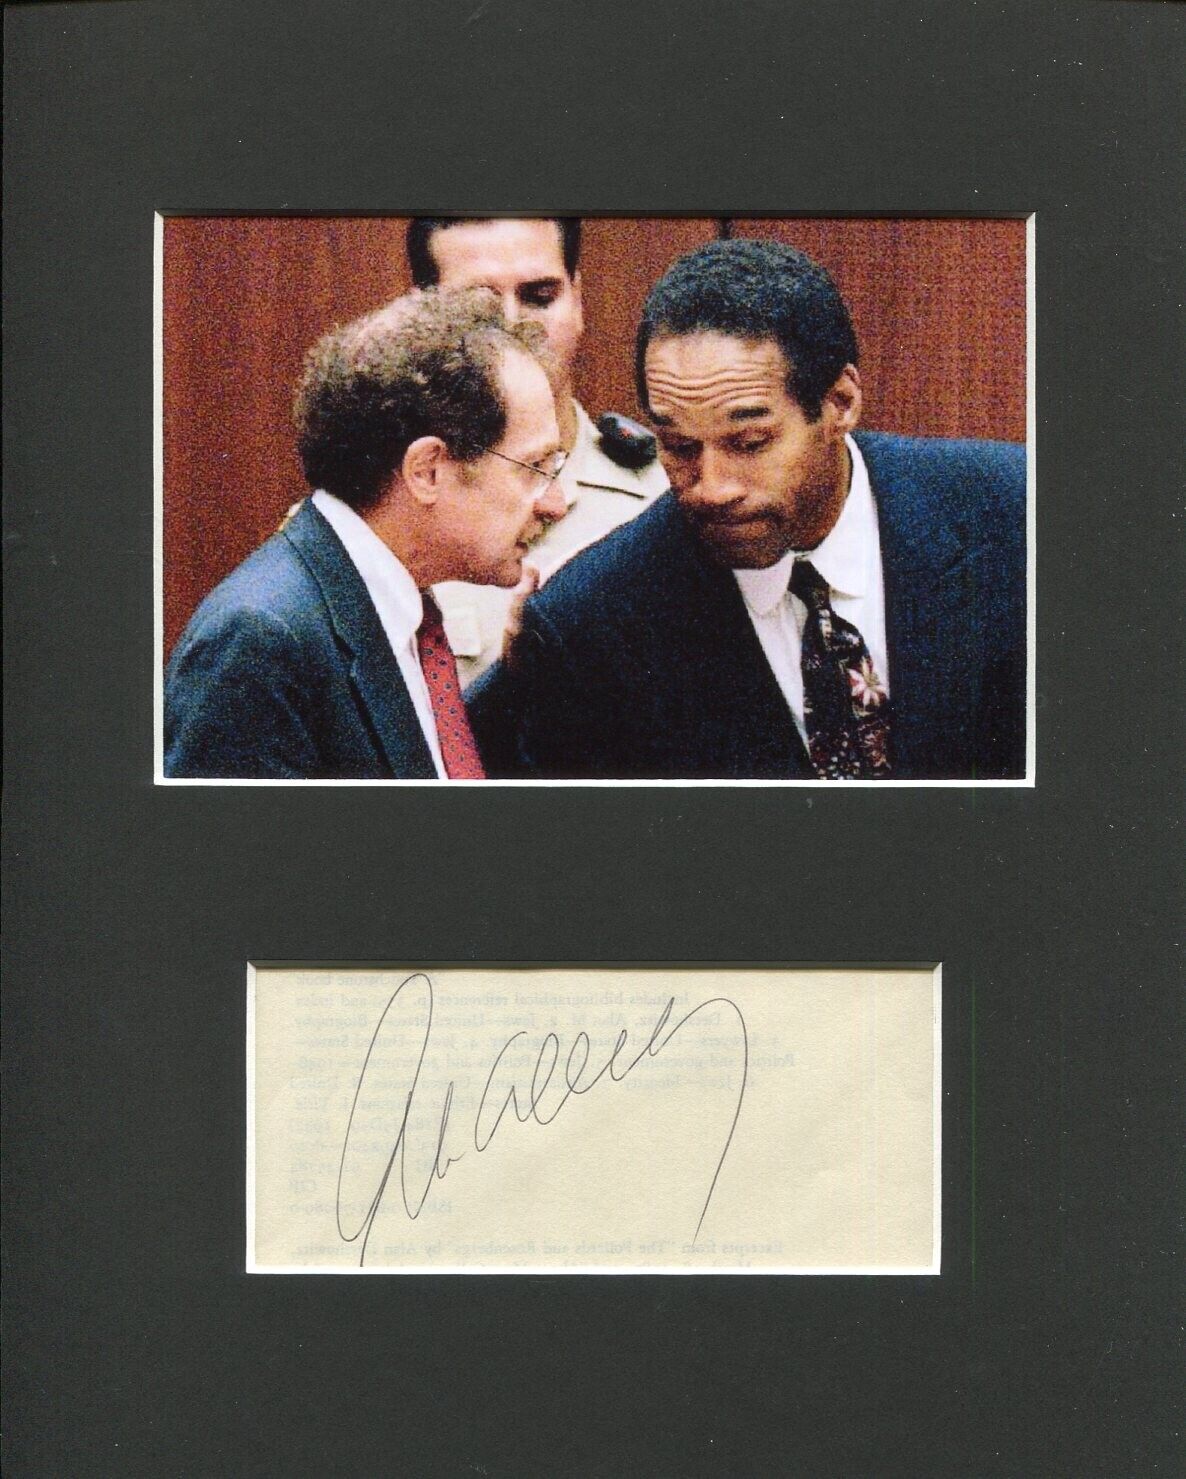 Alan Dershowitz Famous OJ Simpson Lawyer Rare Signed Autograph Photo Display